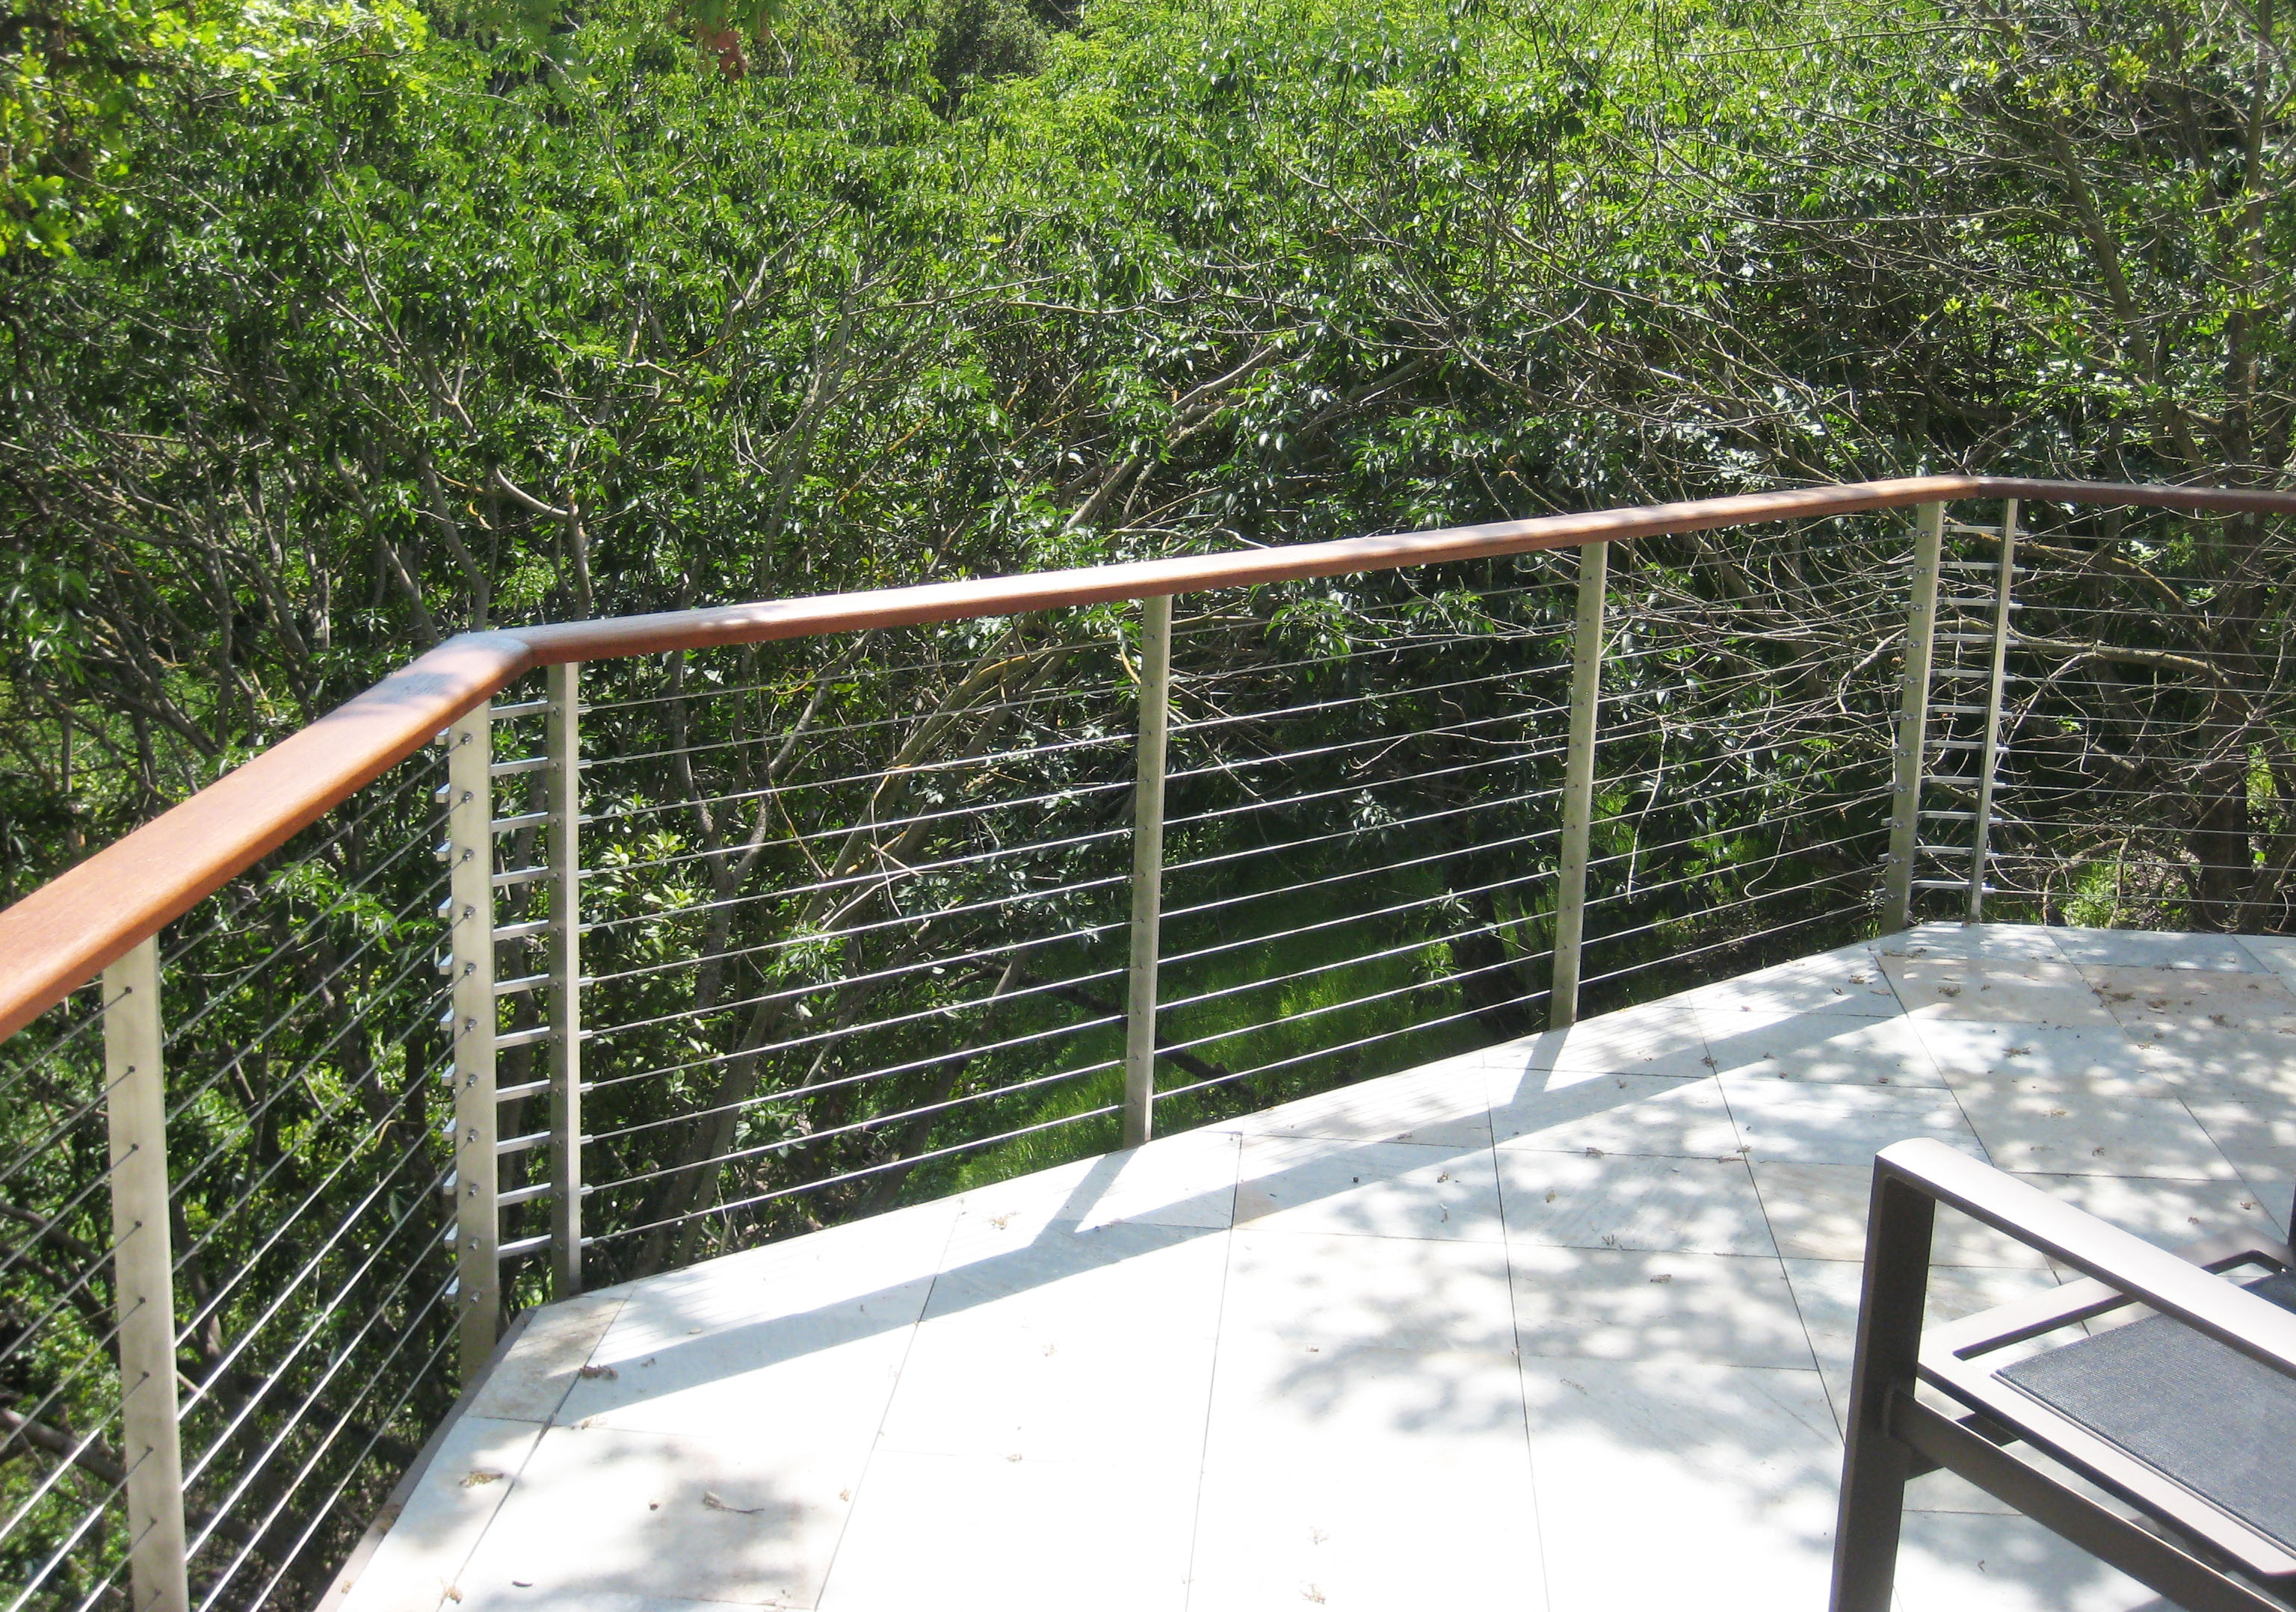 316 stainless steel railing